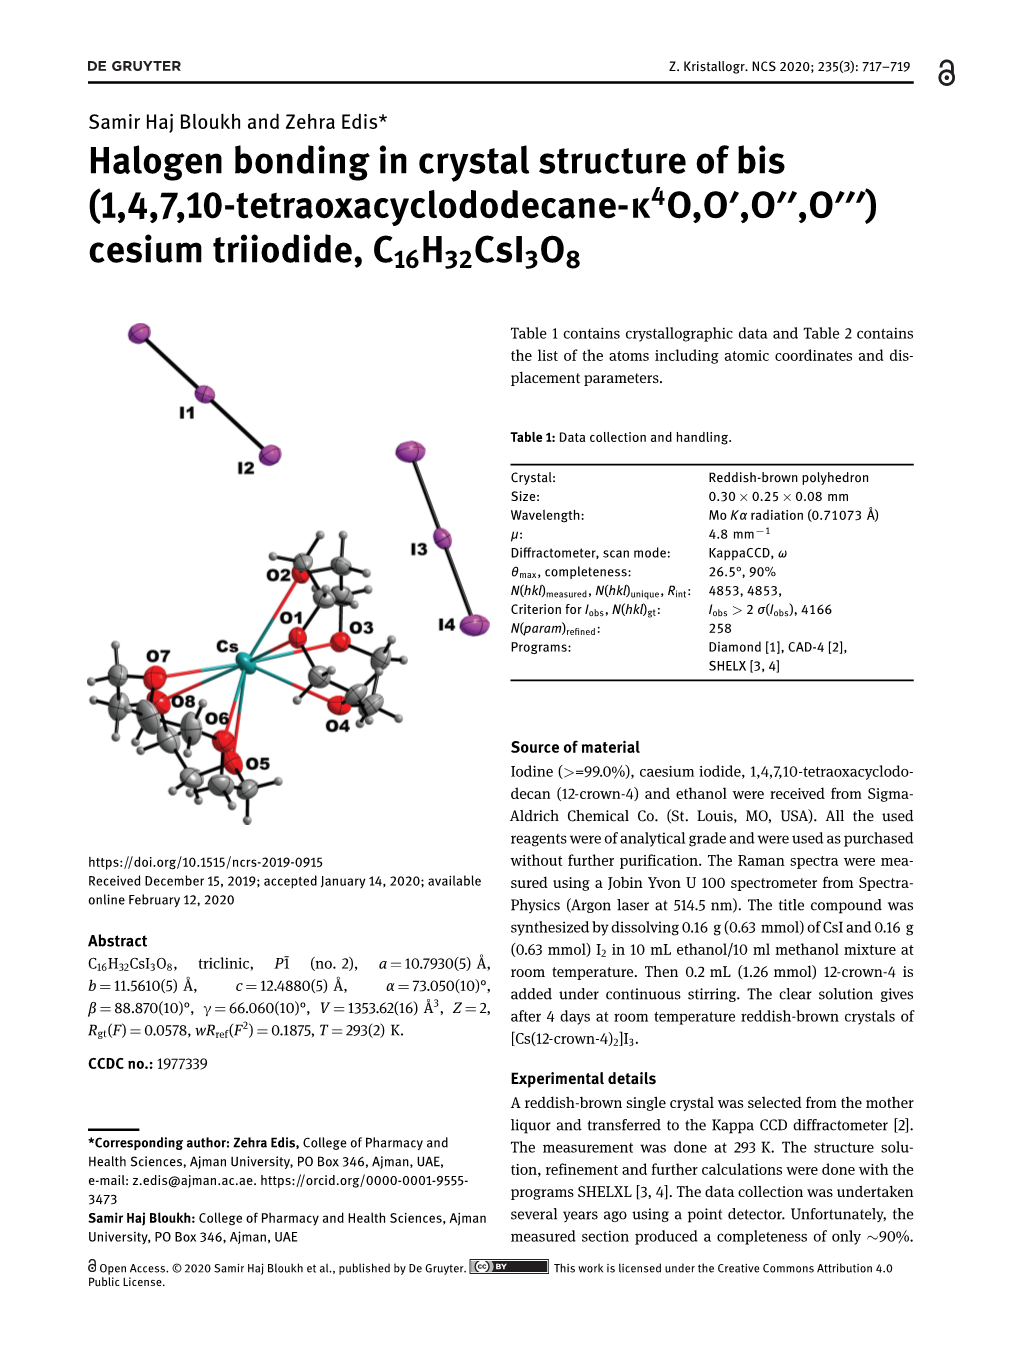 Halogen Bonding in Crystal Structure of Bis (1,4,7,10-Tetraoxacyclododecane-Κ4o,O′,O′′,O′′′) Cesium Triiodide, C16h32csi3o8